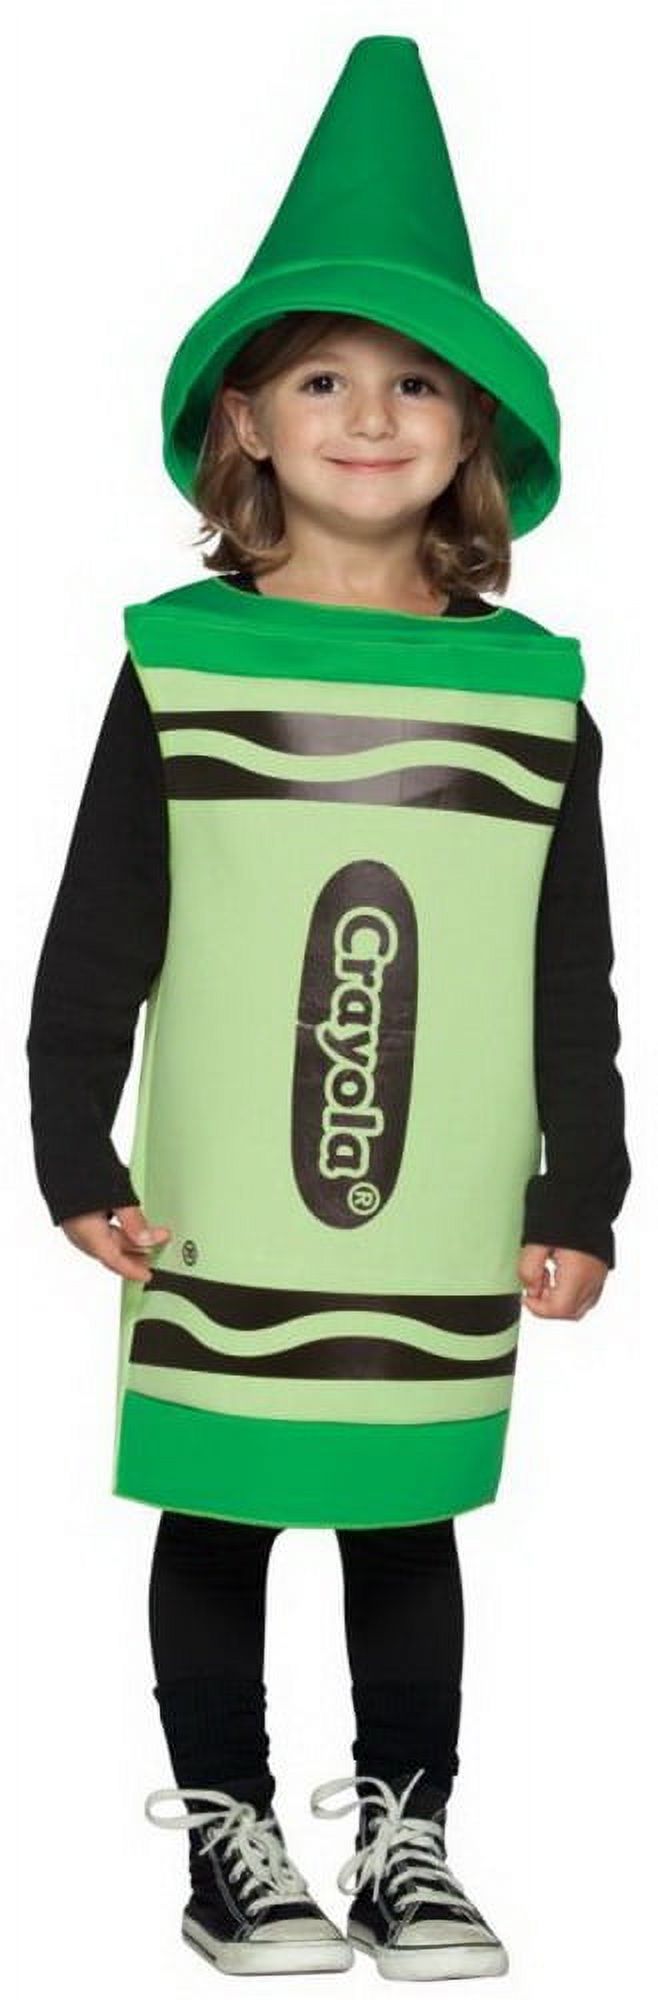 Rasta Imposta Child's Classic Green Crayola Crayon Costume Toddler 4T - image 1 of 2